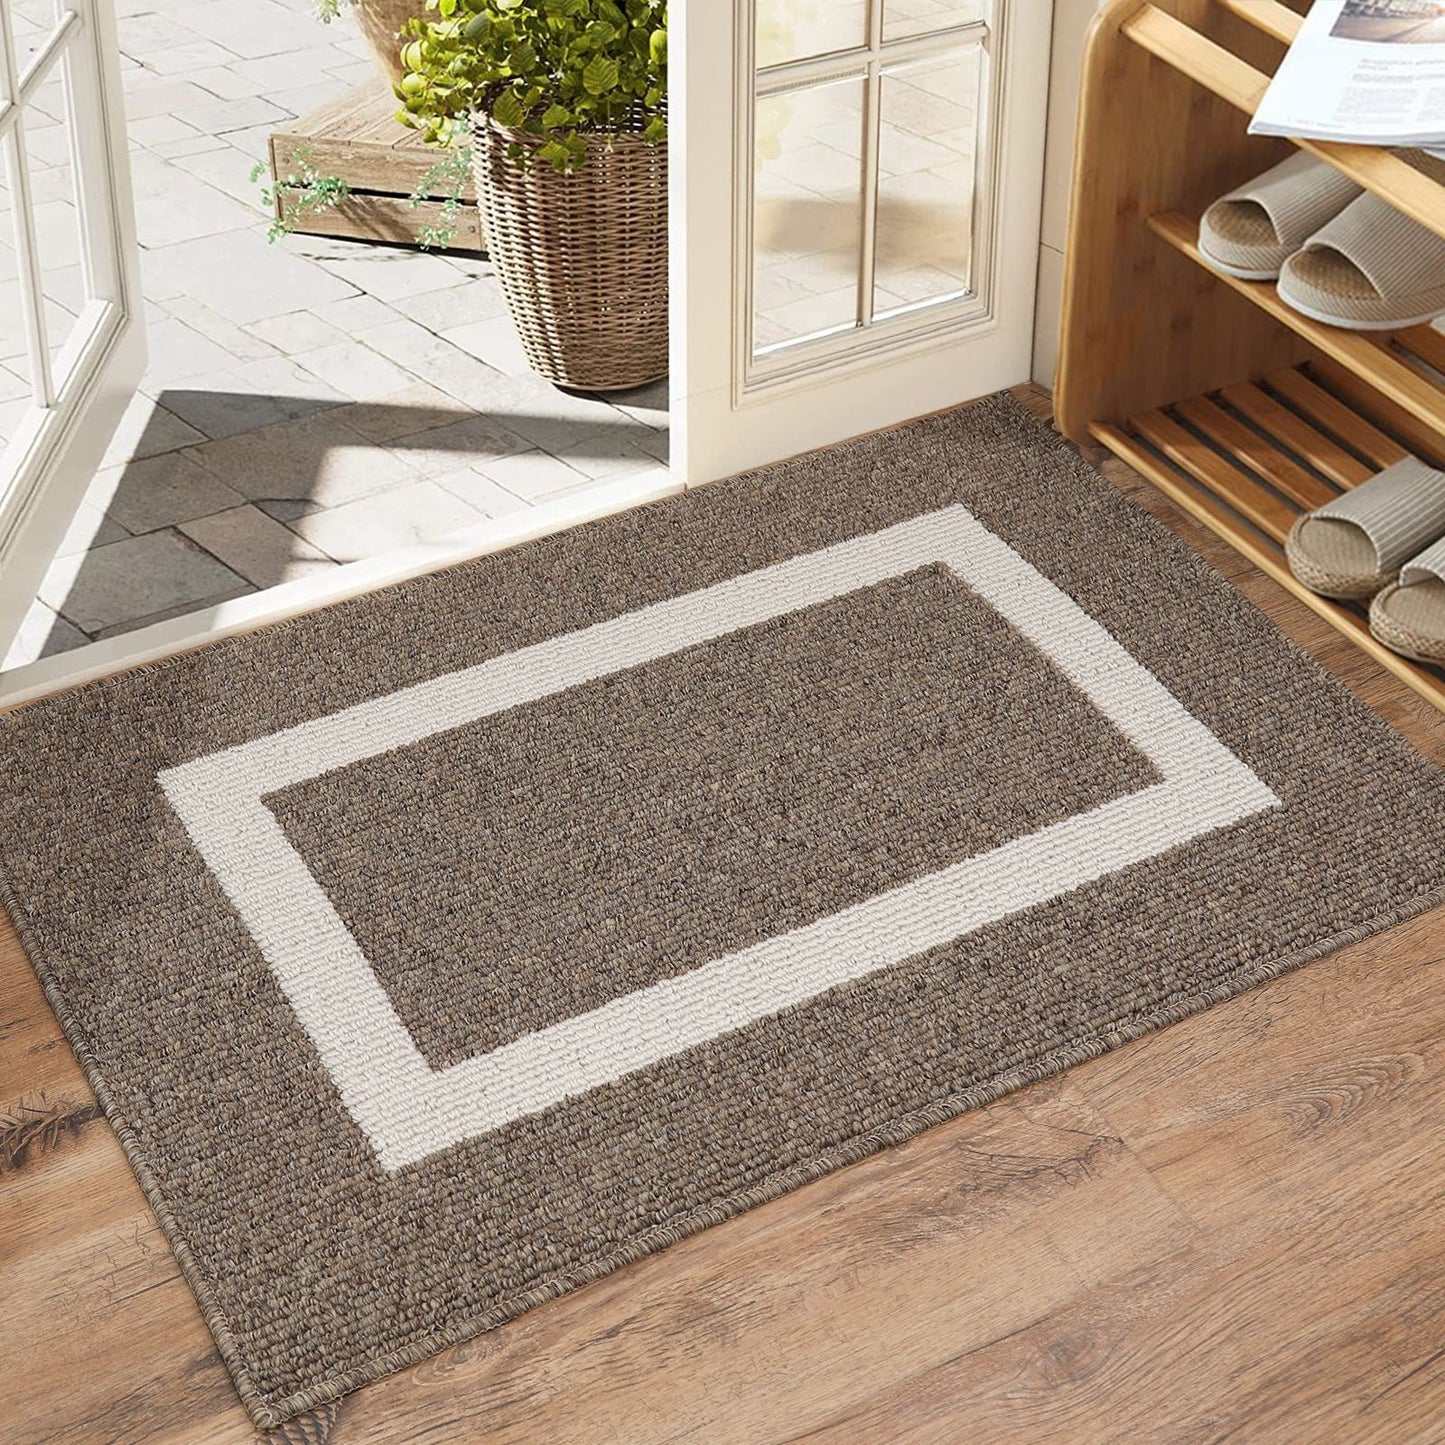 Home Household Minimalist Carpet Home